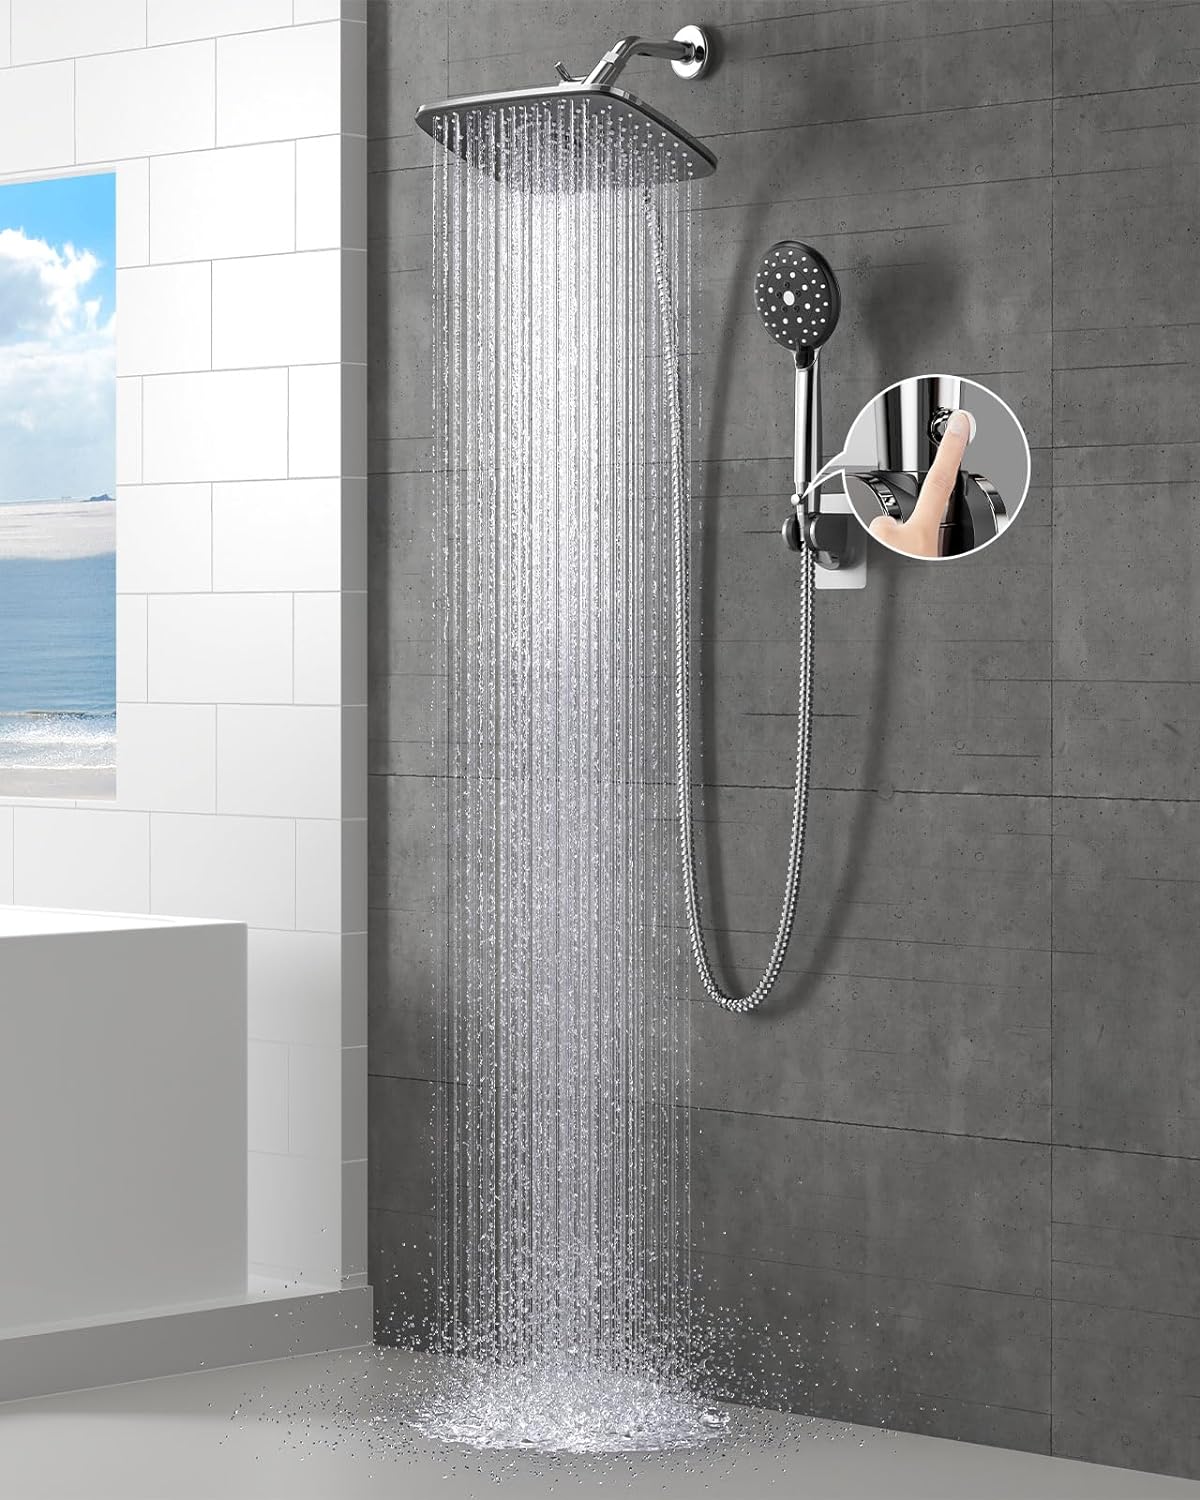 Veken 12 Inch High Pressure Rain Shower Head -Shower Heads with 5 Modes Handheld Spray Combo - Chrome